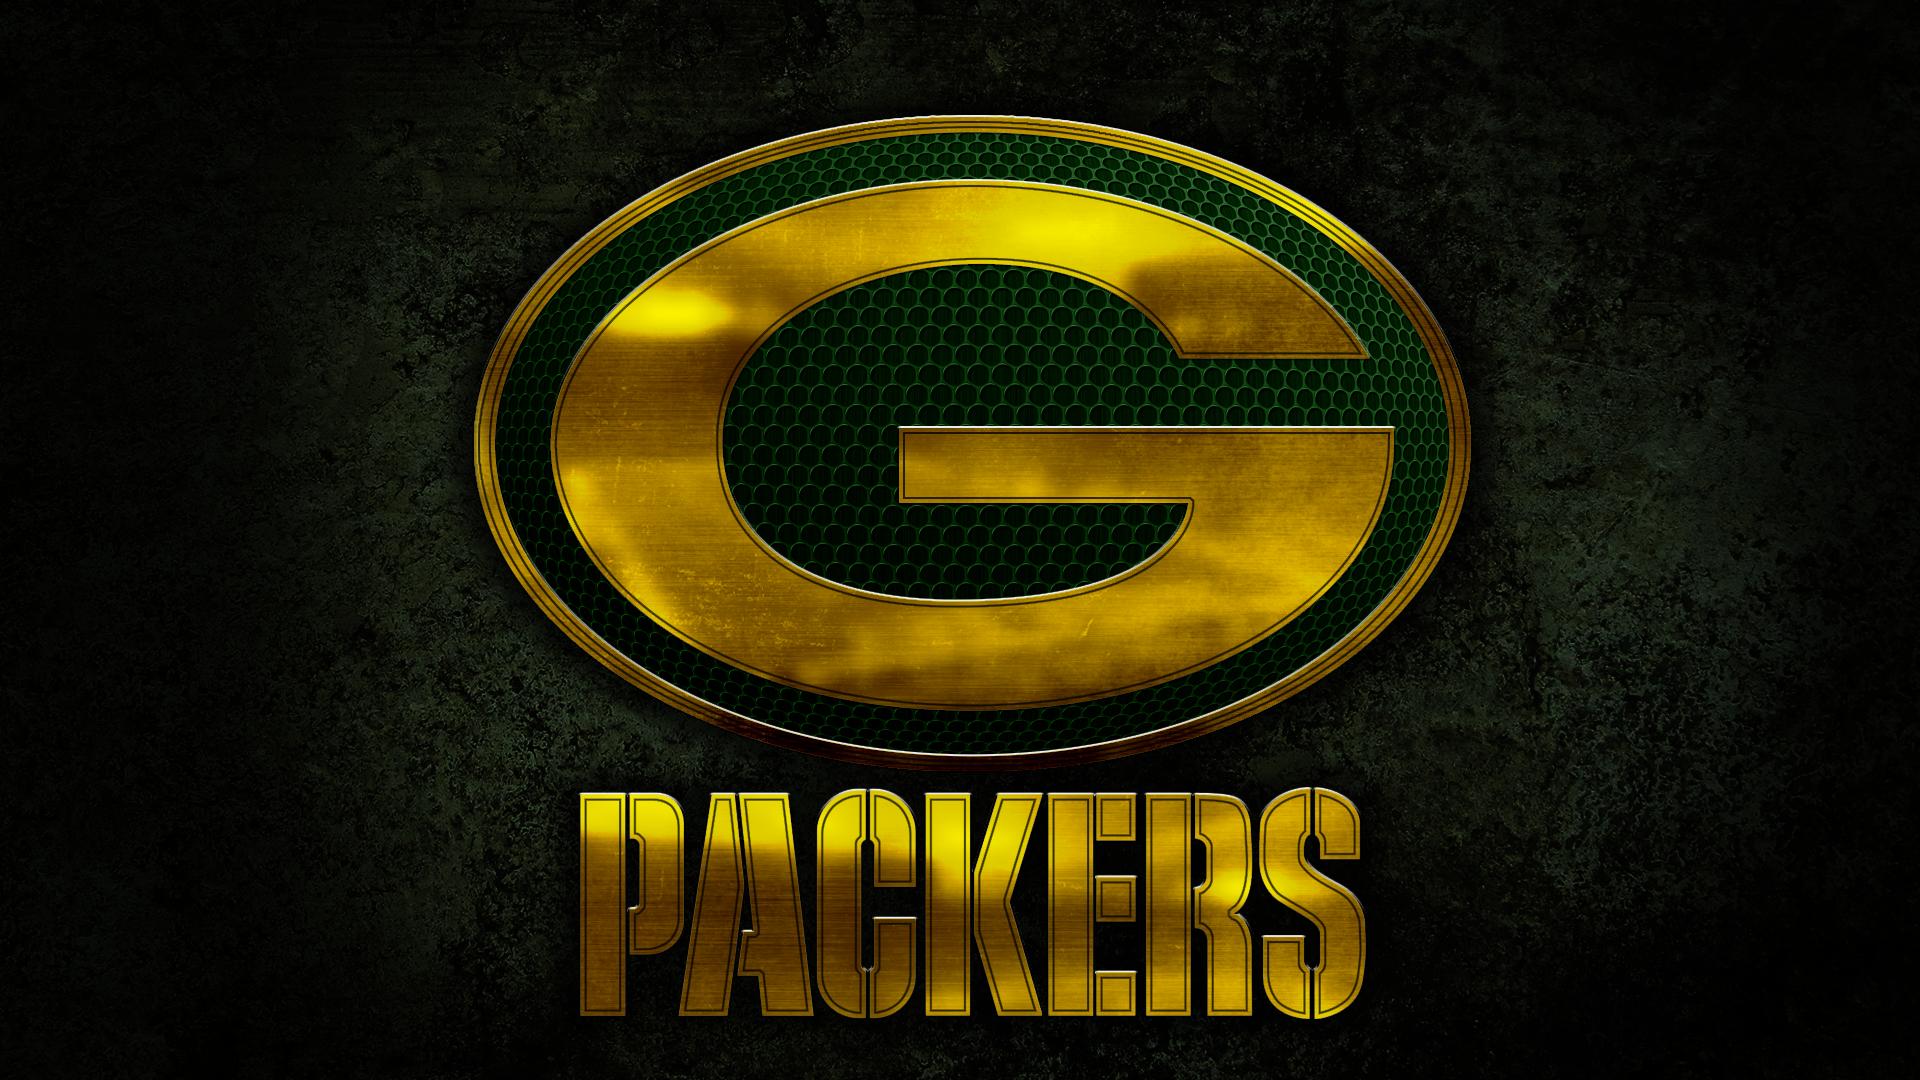 Green Bay Packers  HD wallpapers, Desktop wallpaper - most viewed